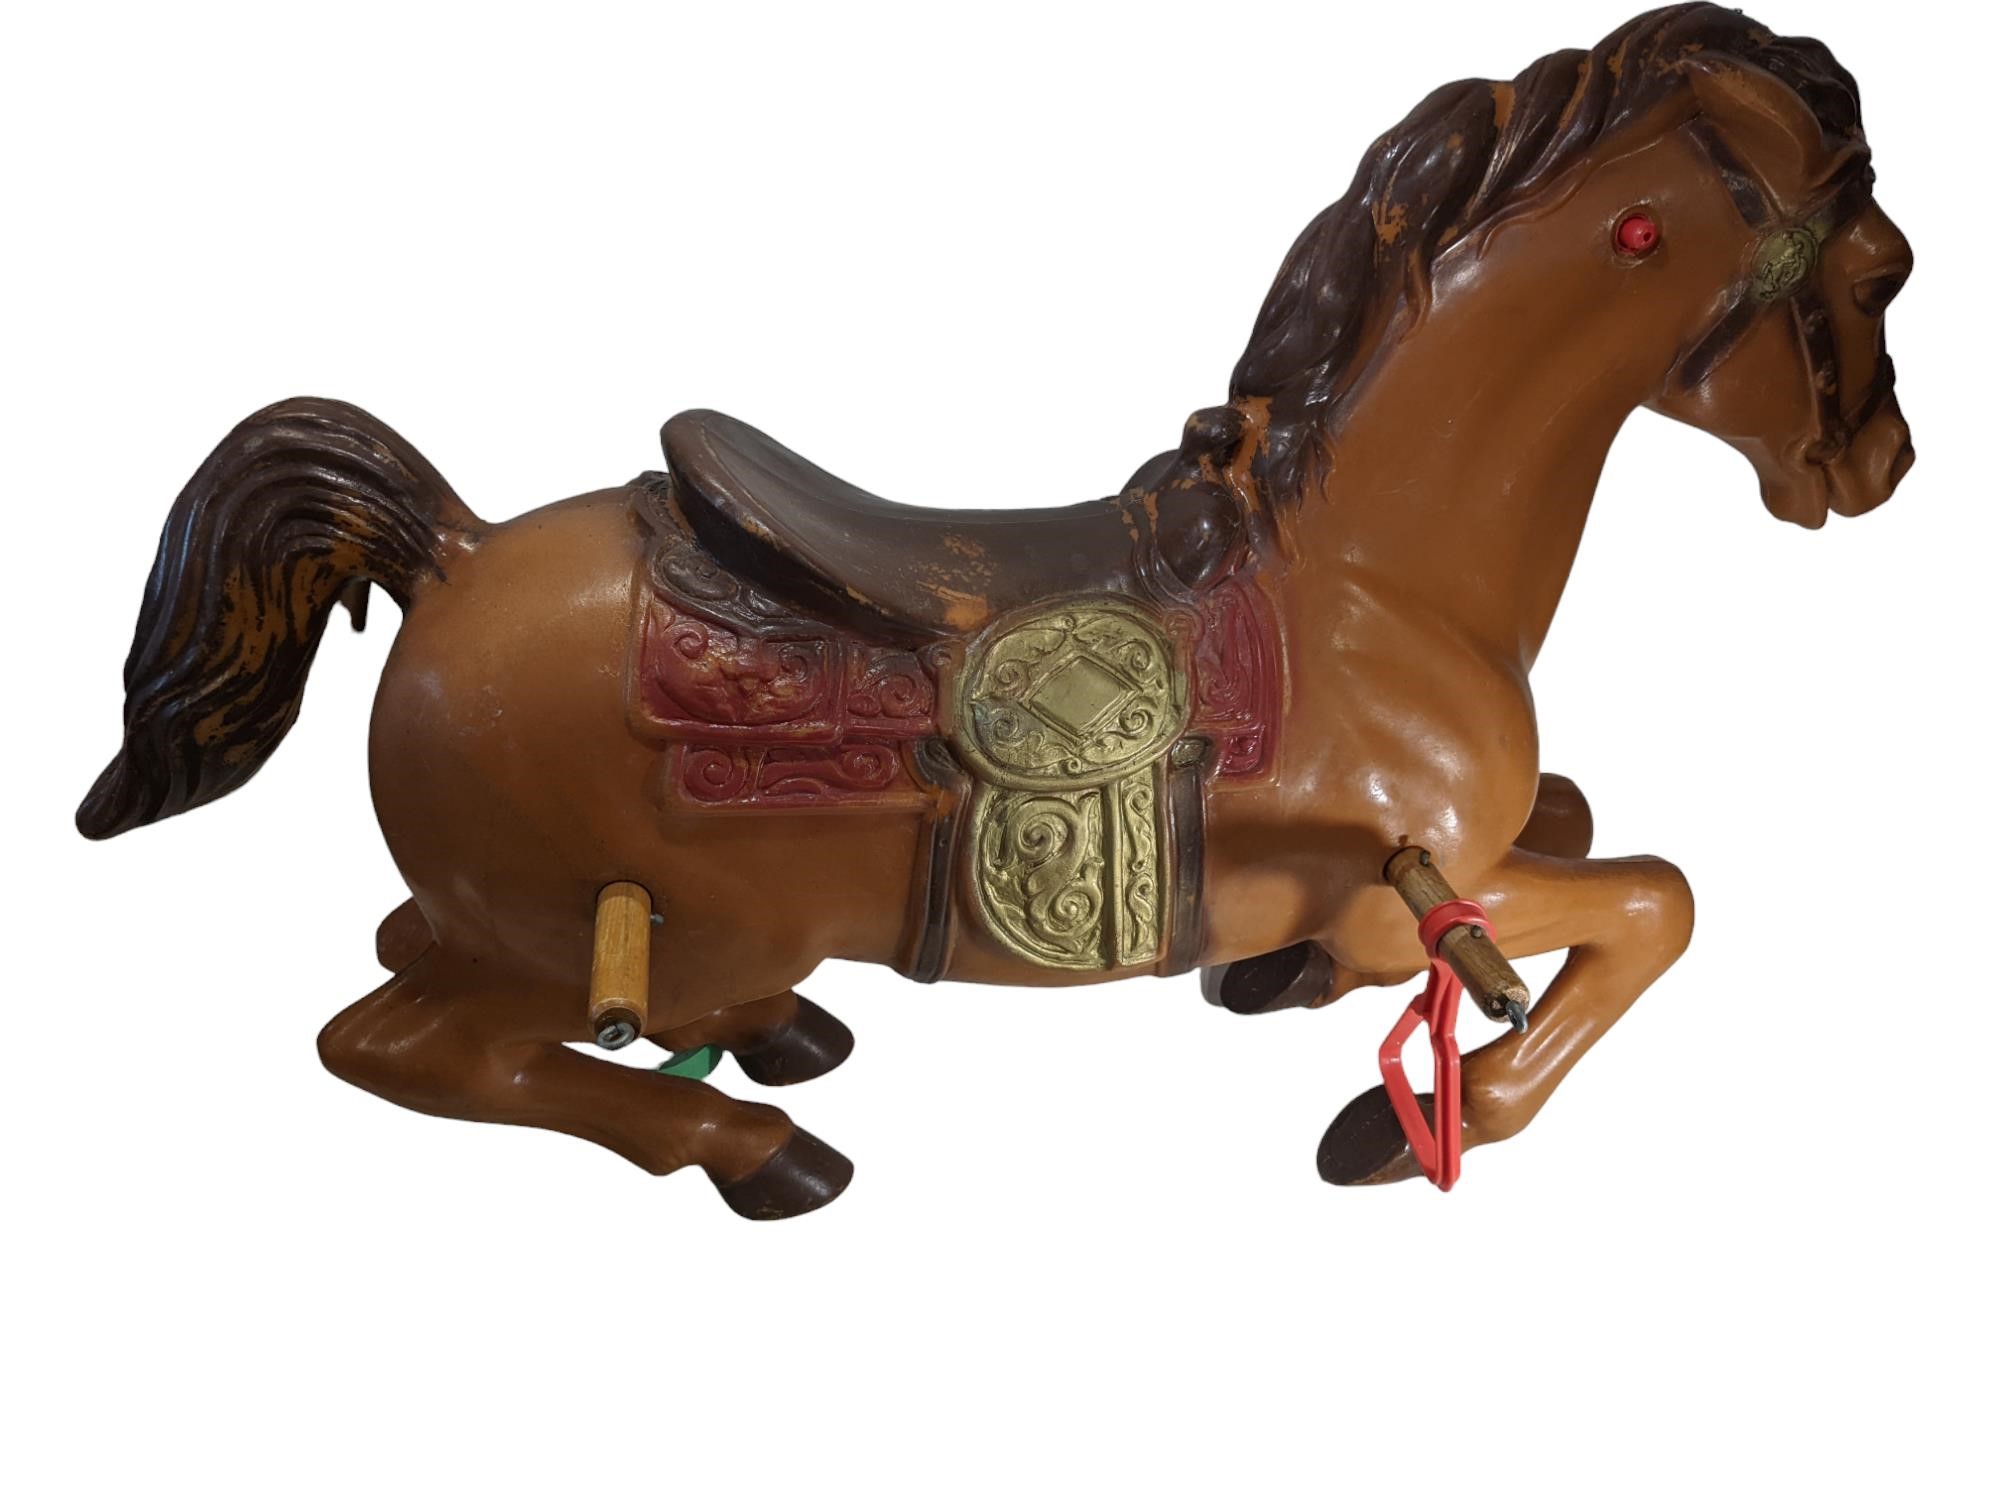 Vintage rocking horse - horse only